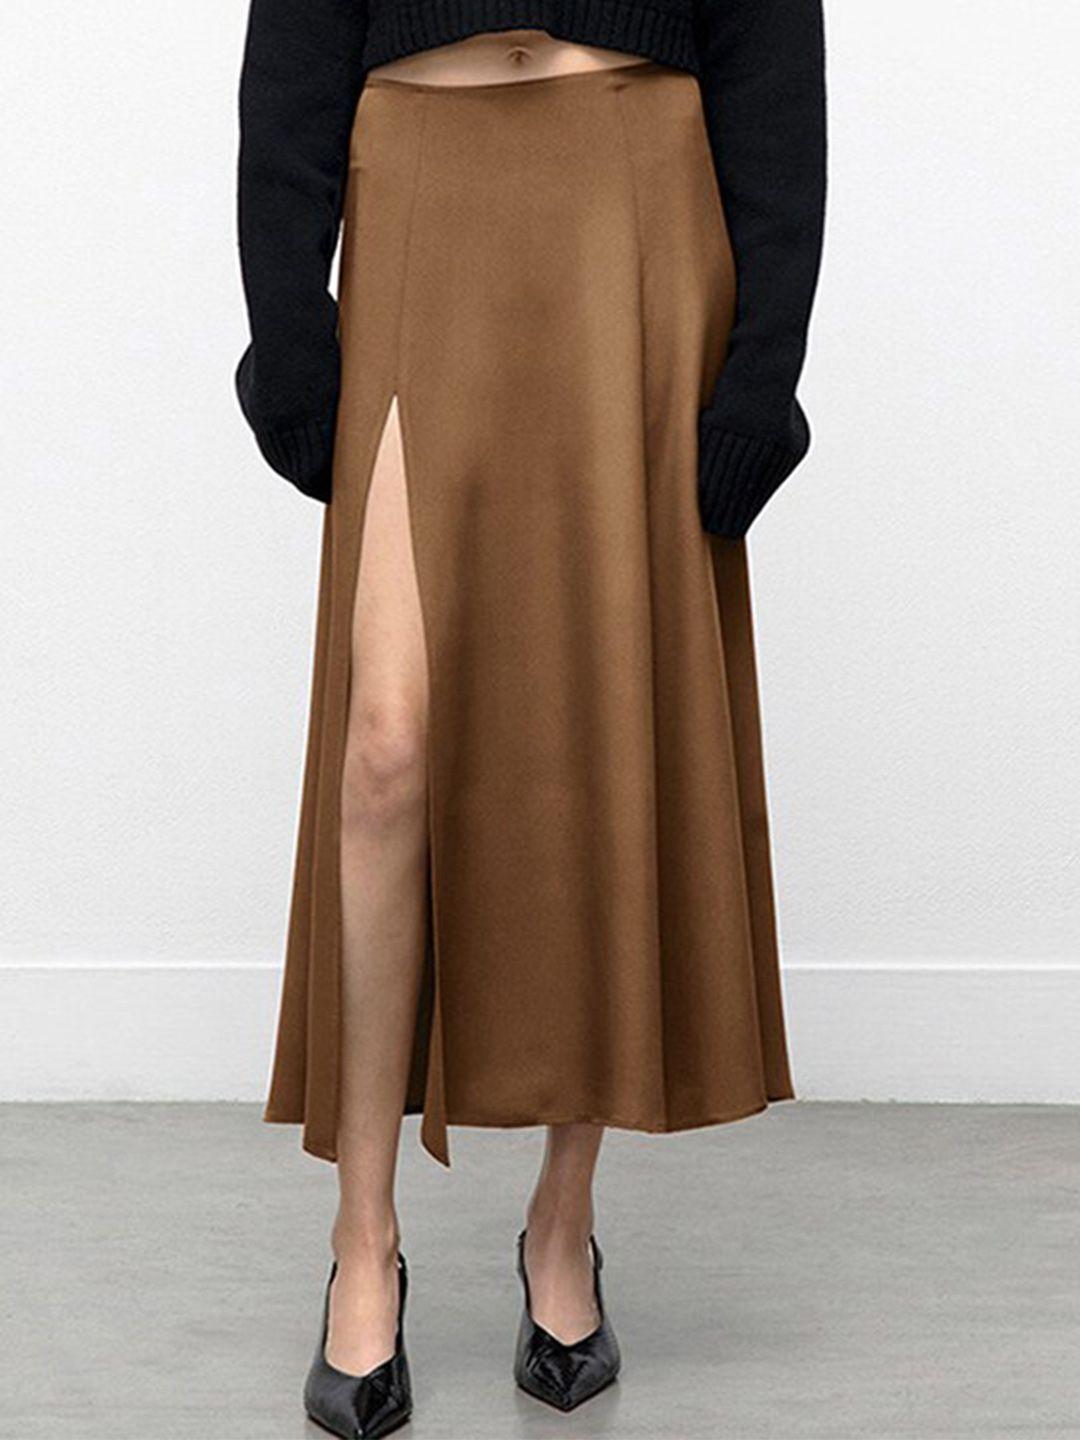 stylecast brown front slit a-line midi skirt